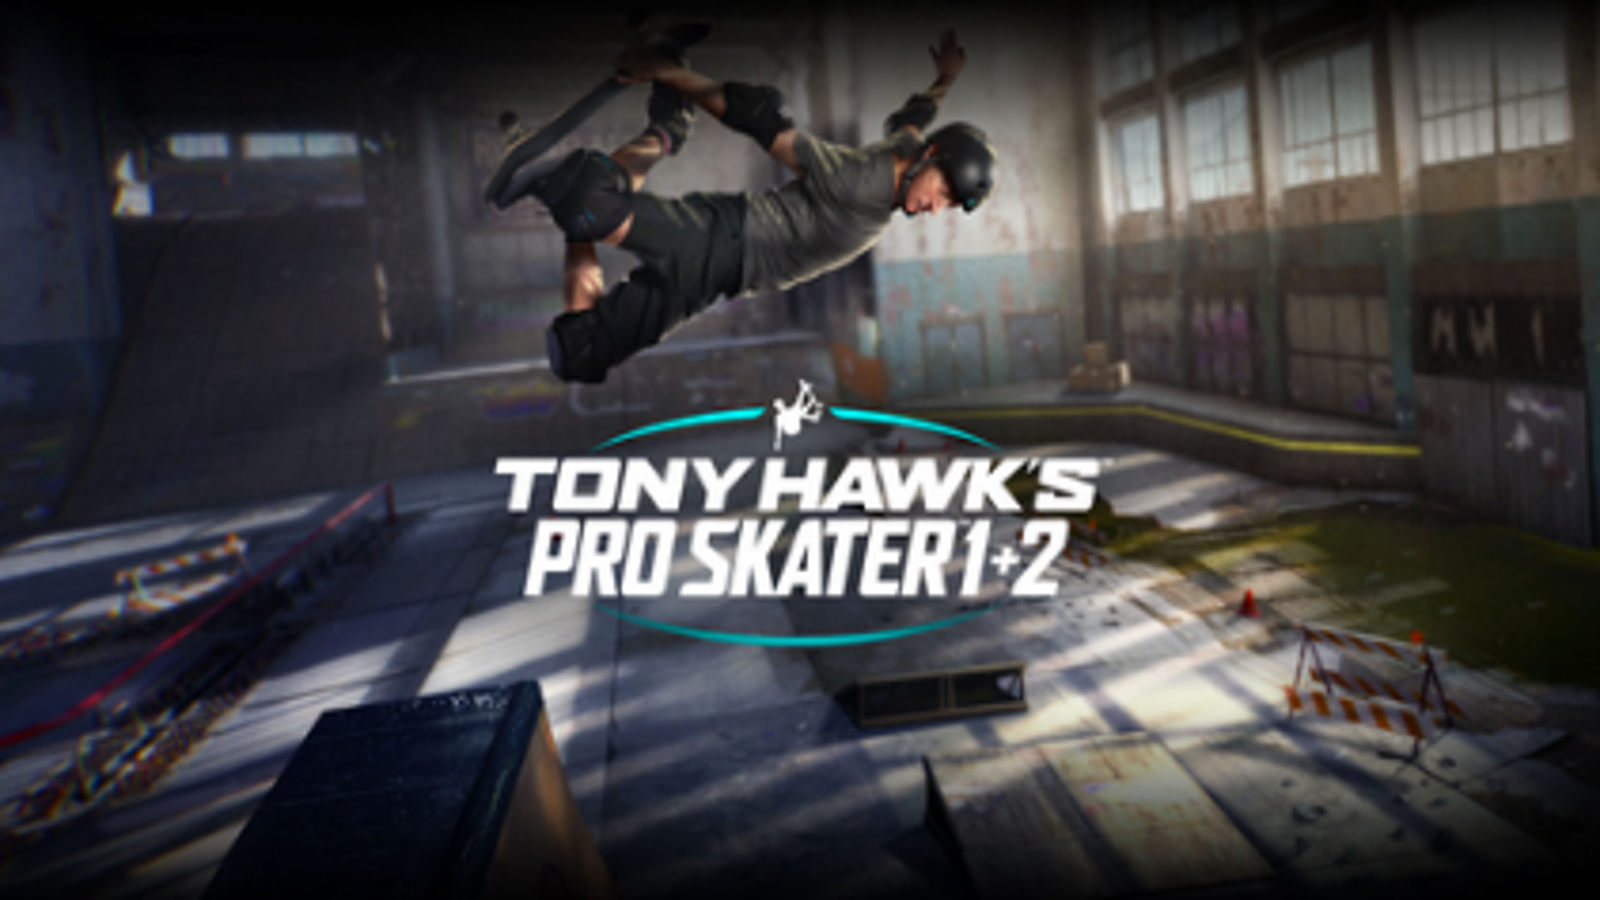  Tony Hawks' Pro Skater 3 : Gamecube: Video Games